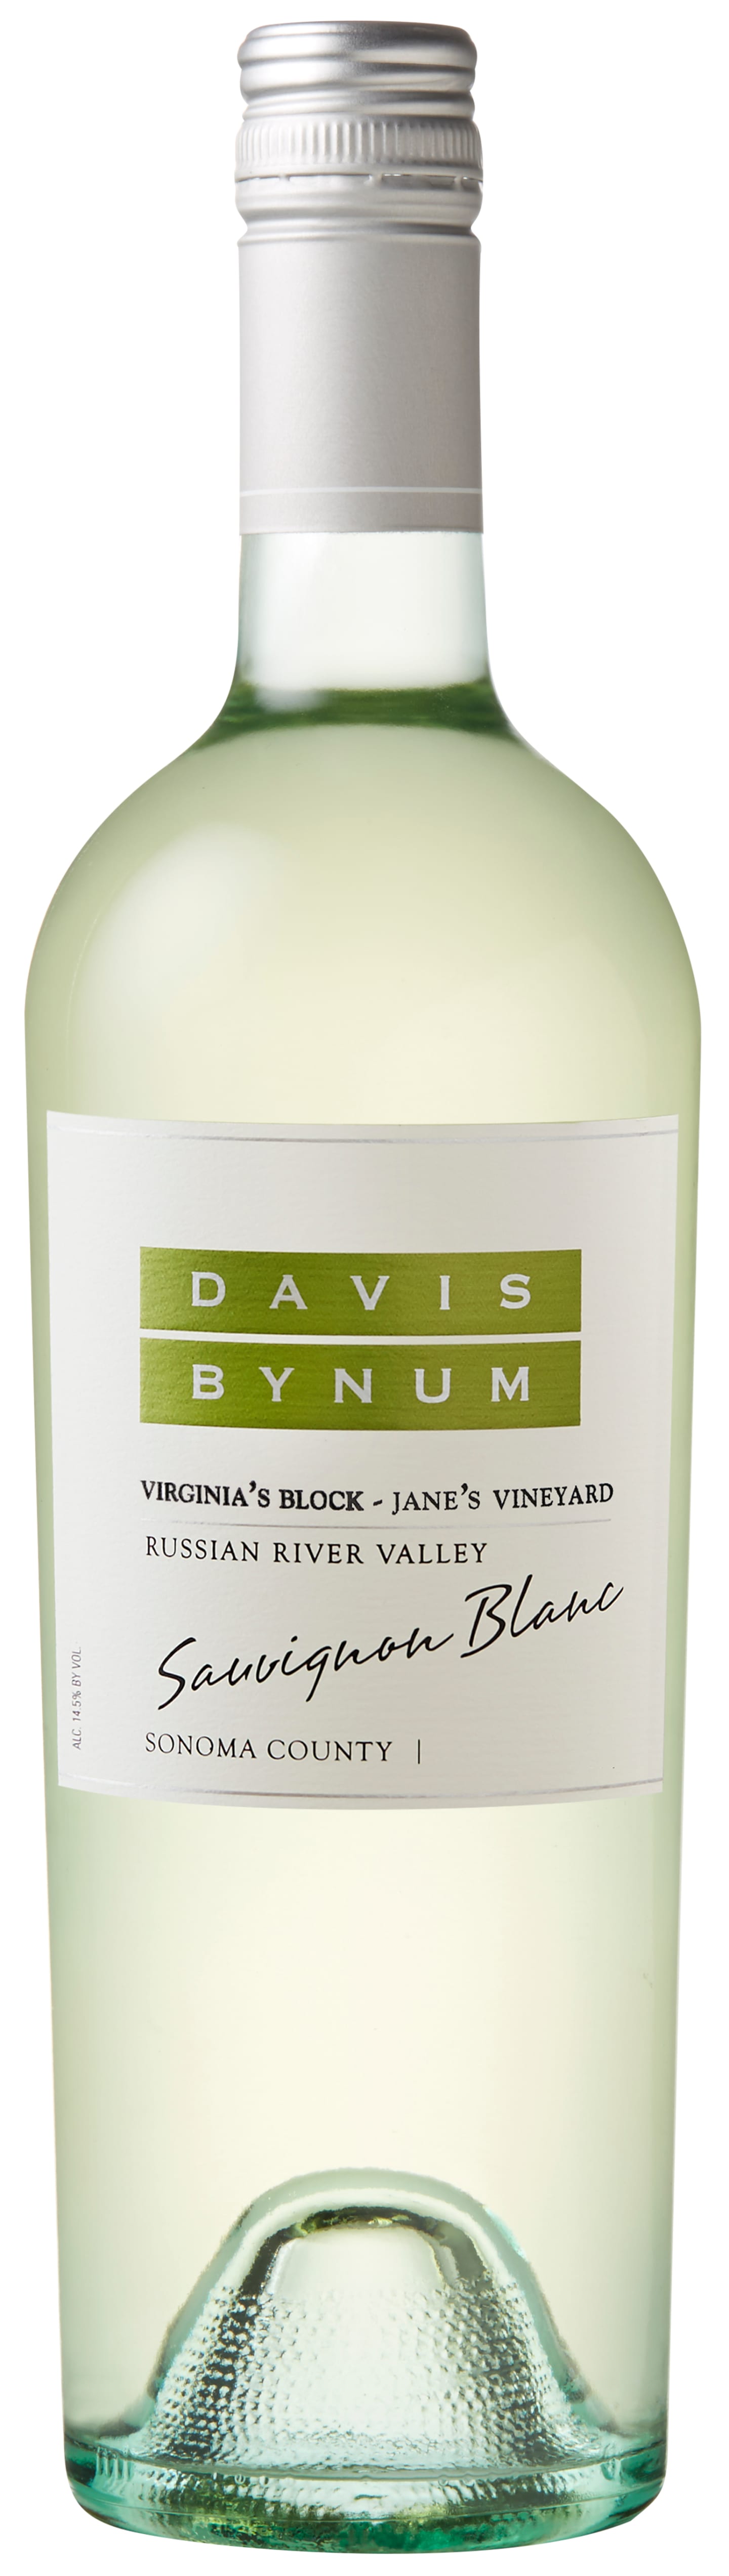 Davis Bynum Sauvignon Blanc Virginia's Block 2018